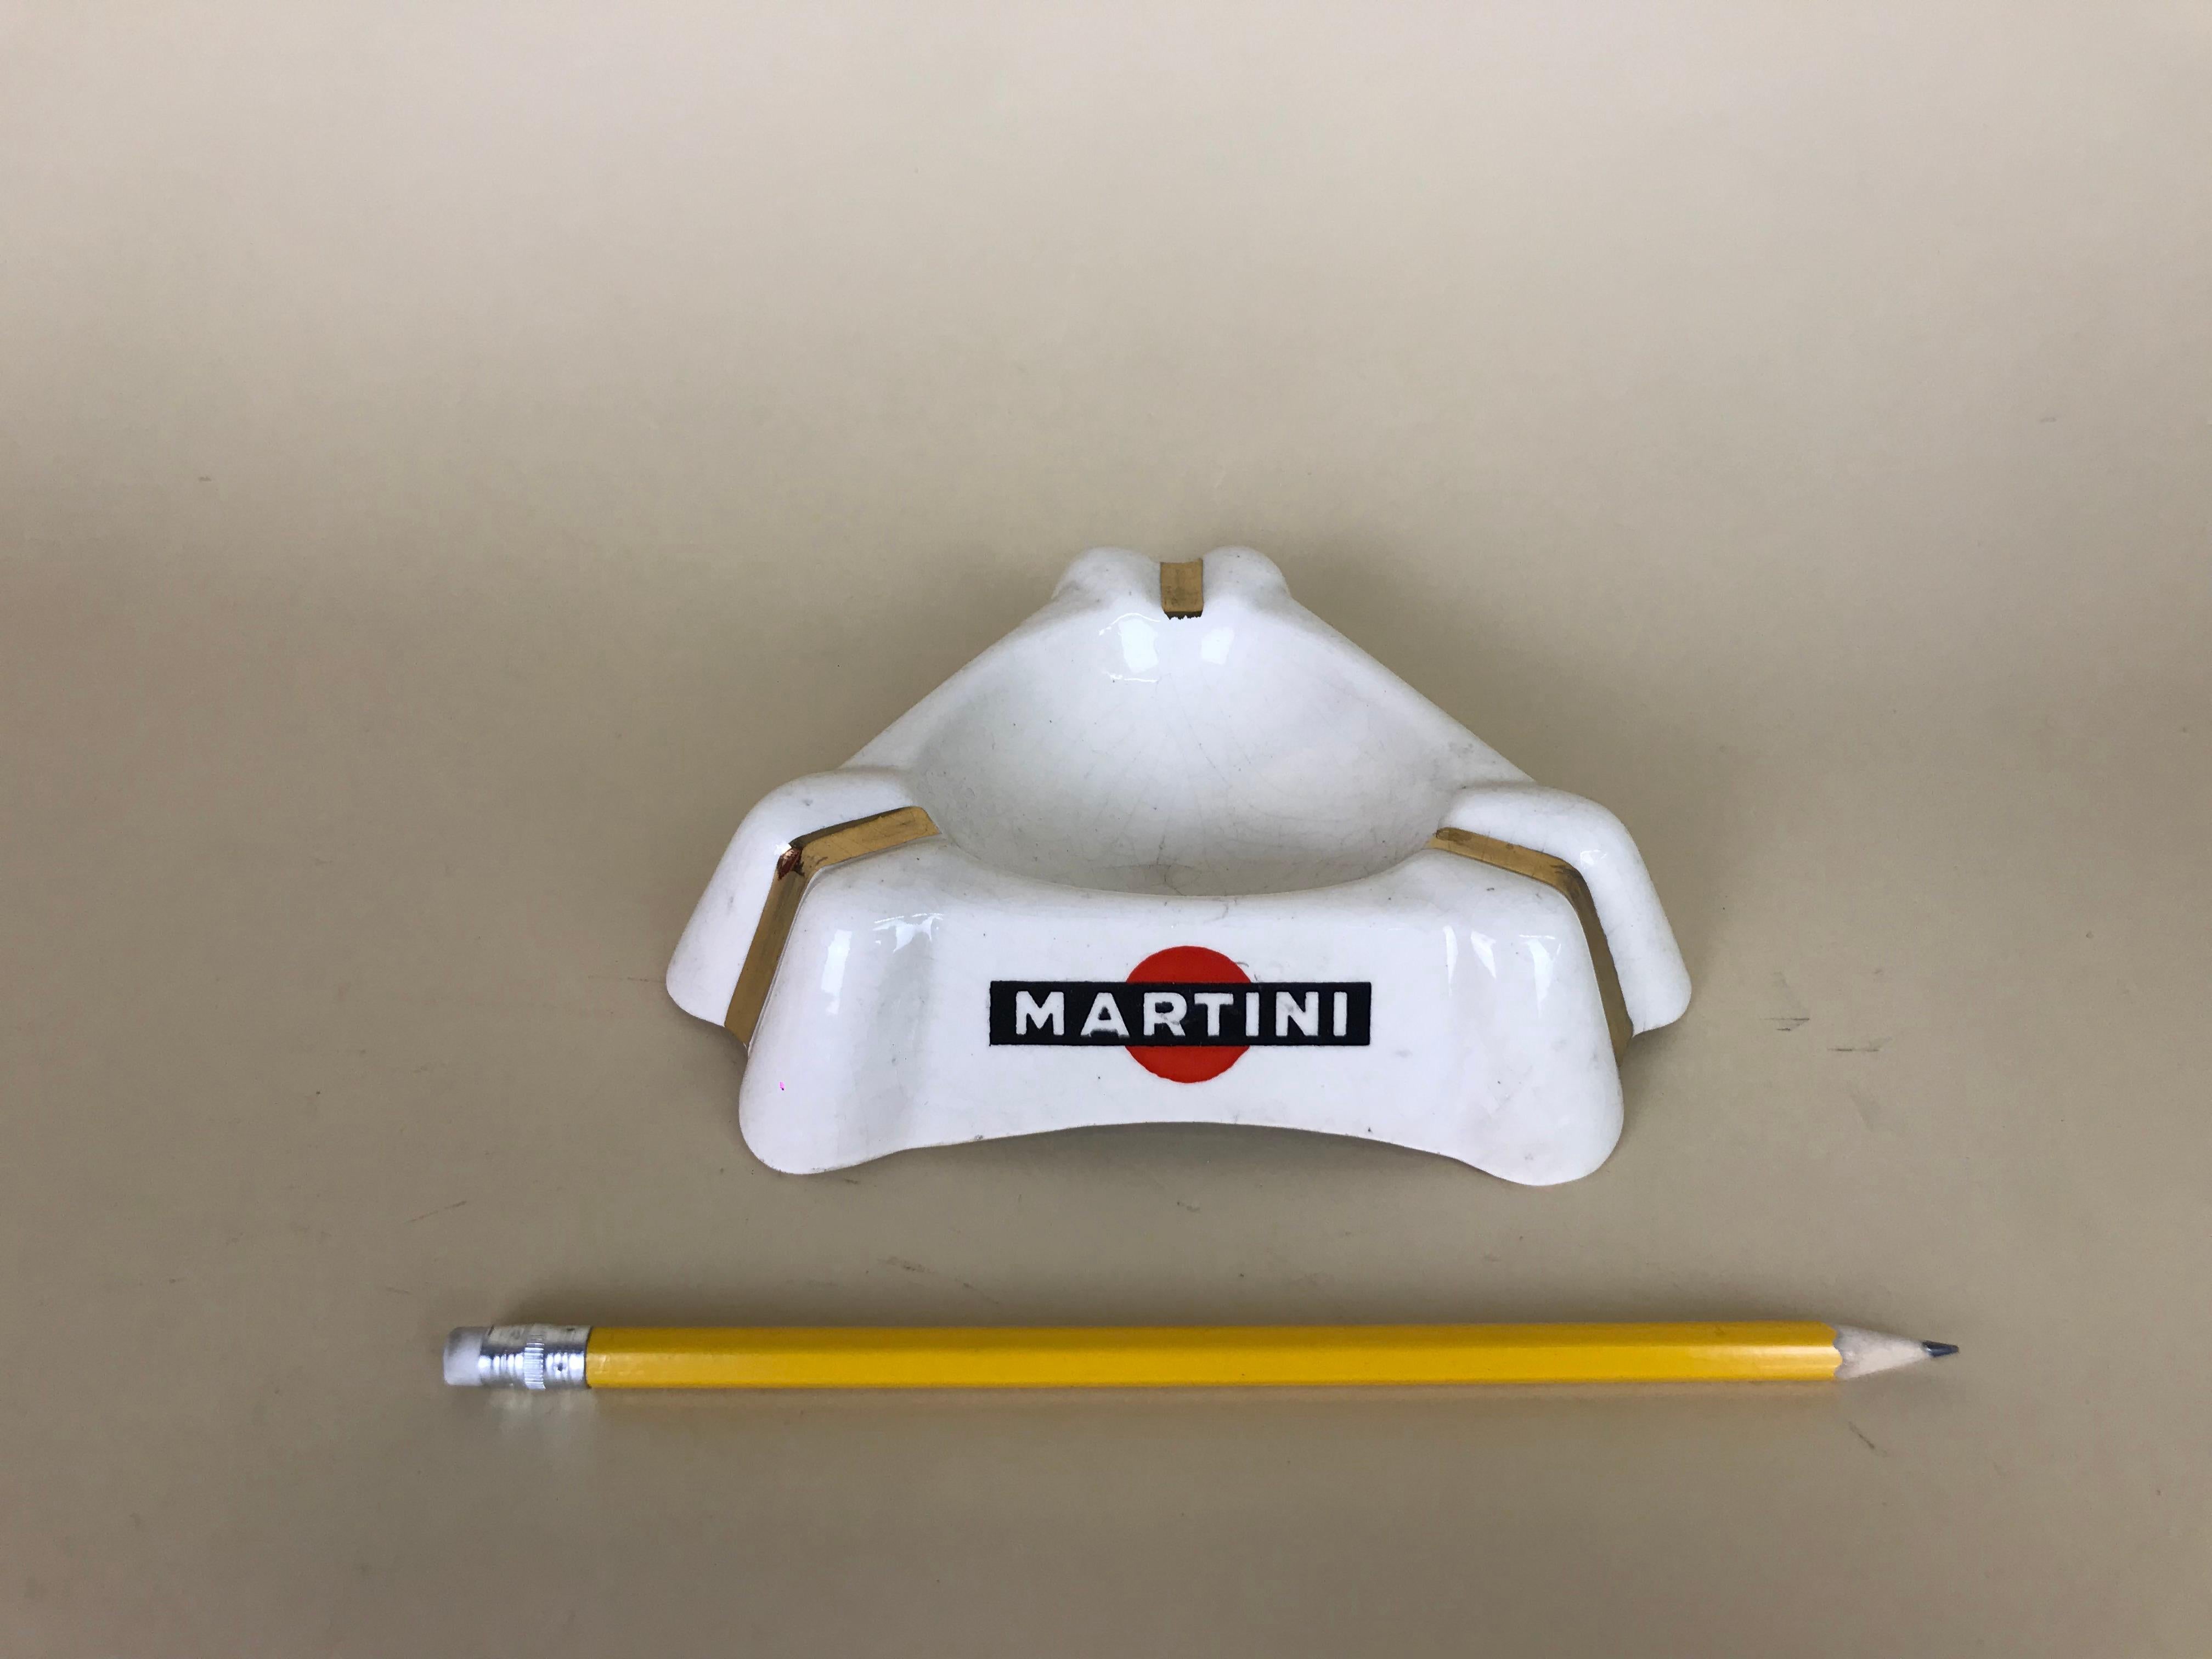 martini ashtray